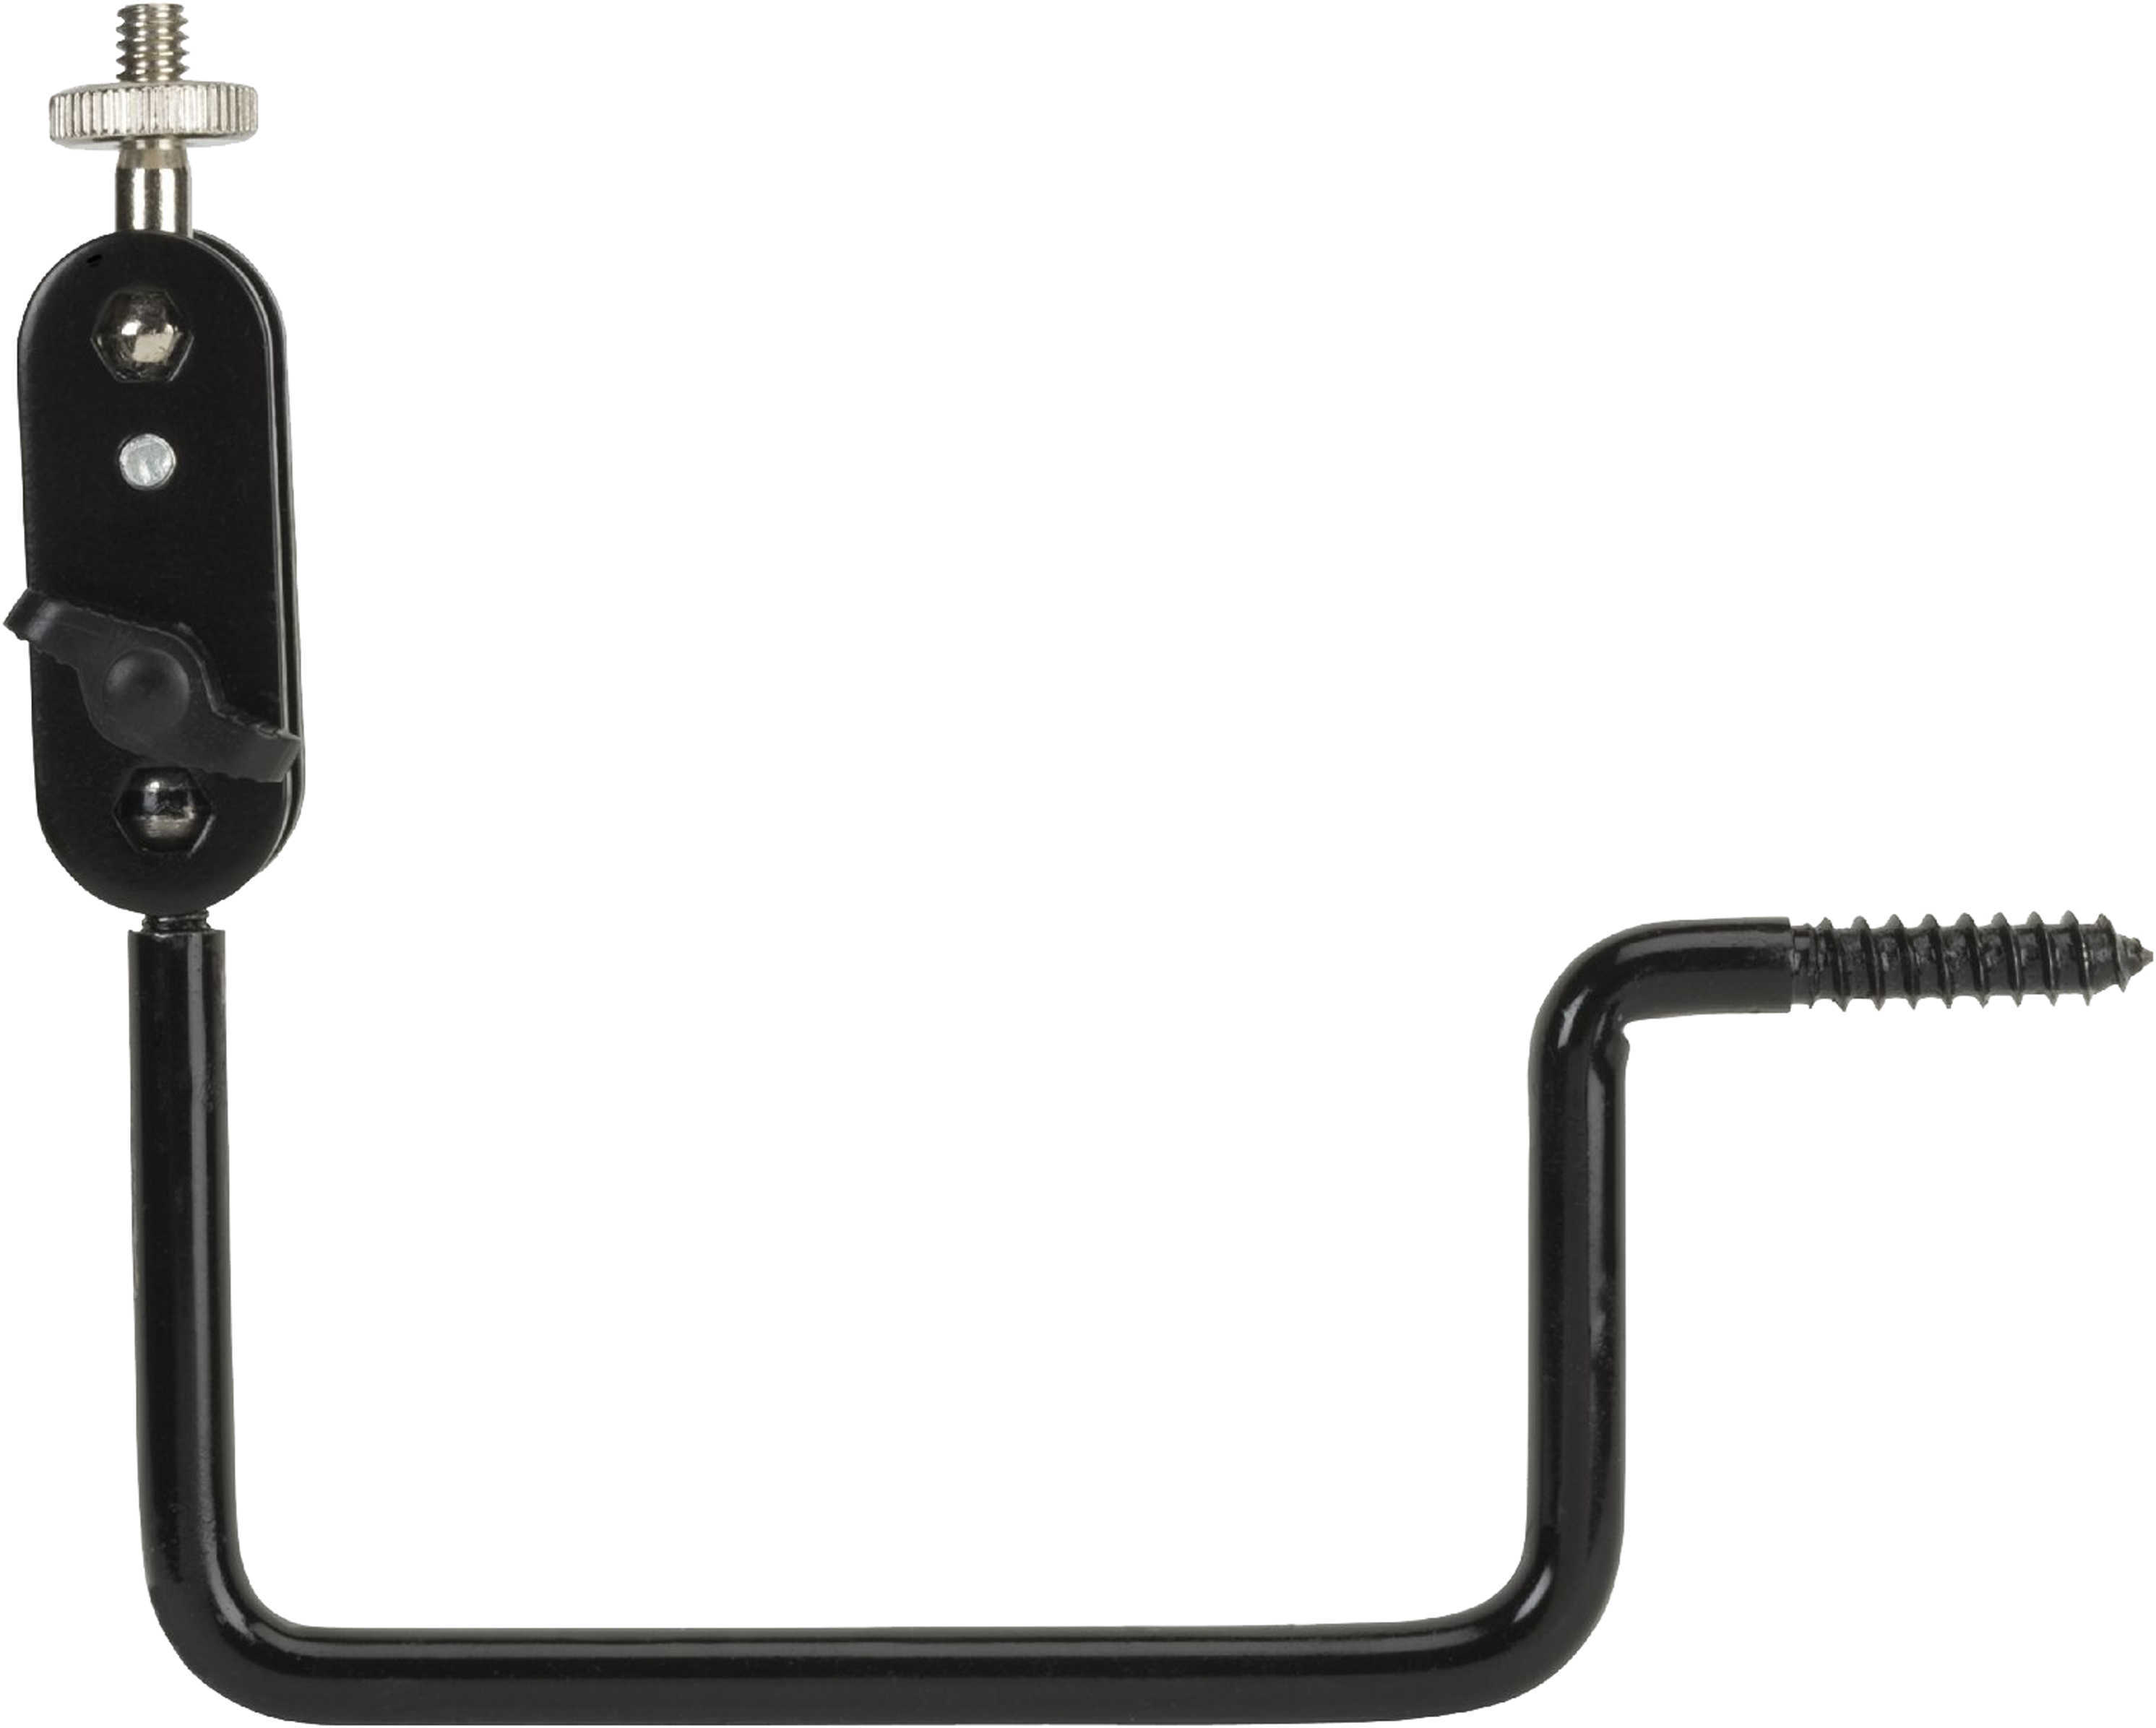 Bushnell Camera Bracket Black Screw In, Adjustable Head Md: 119515C